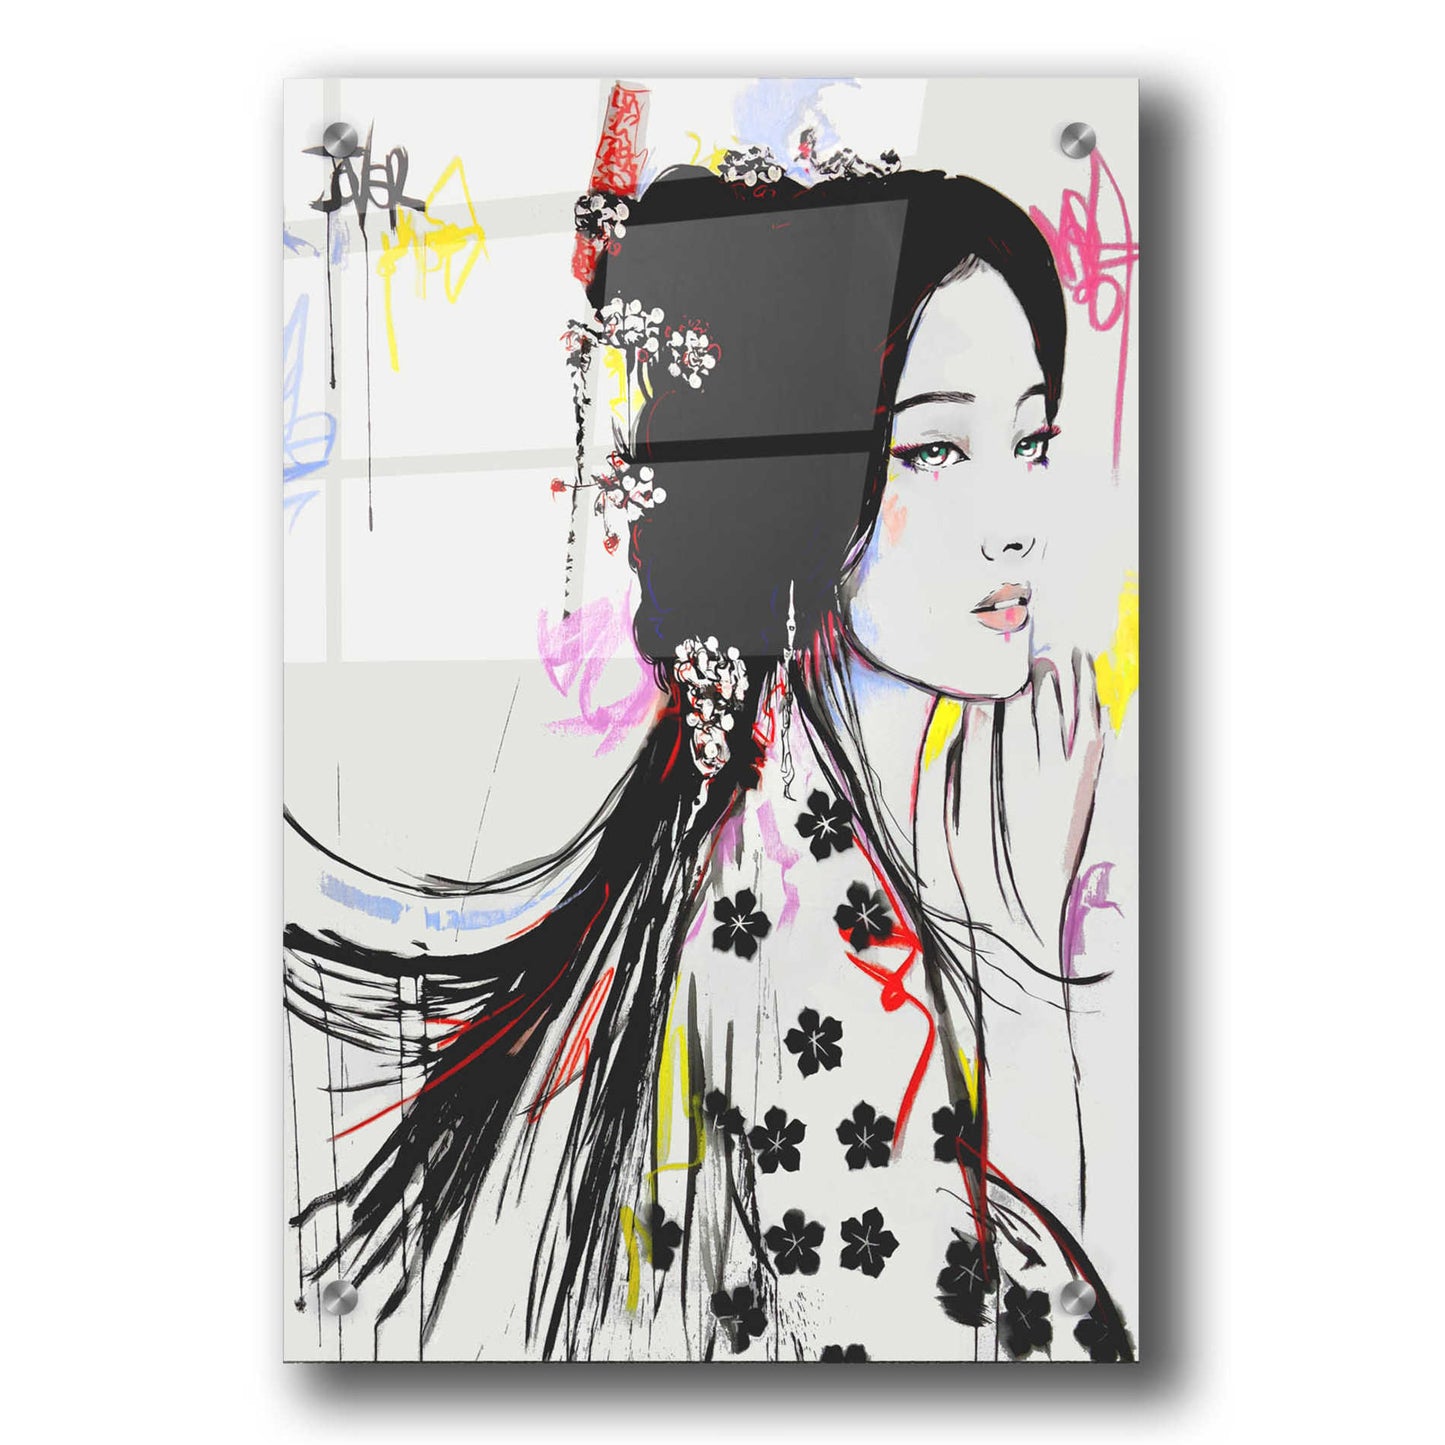 Epic Art 'Jing' by Loui Jover Acrylic Glass Wall Art,24x36